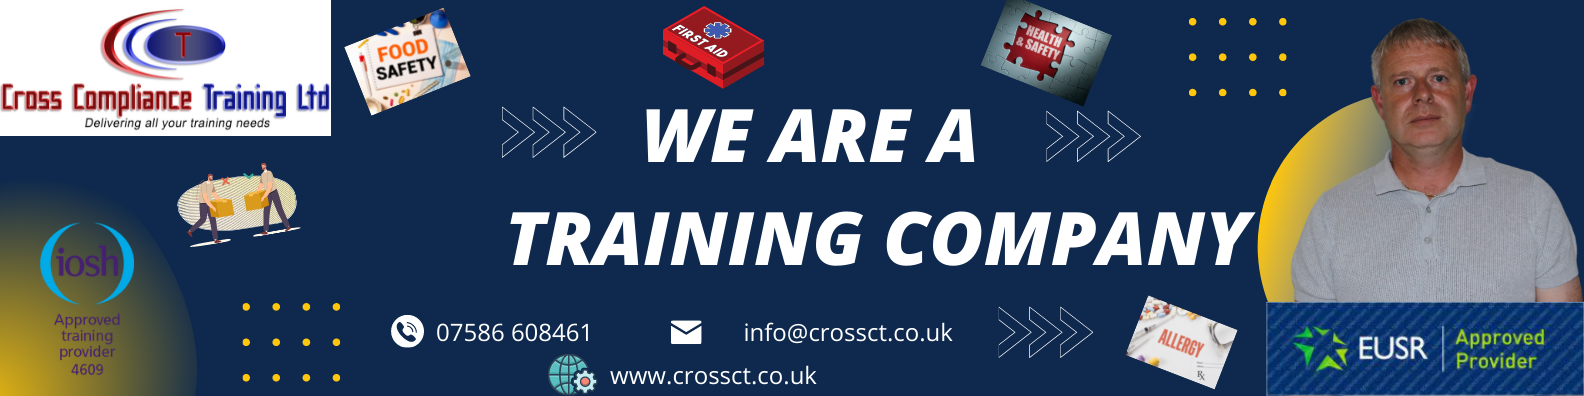 Cross Compliance Training Limited